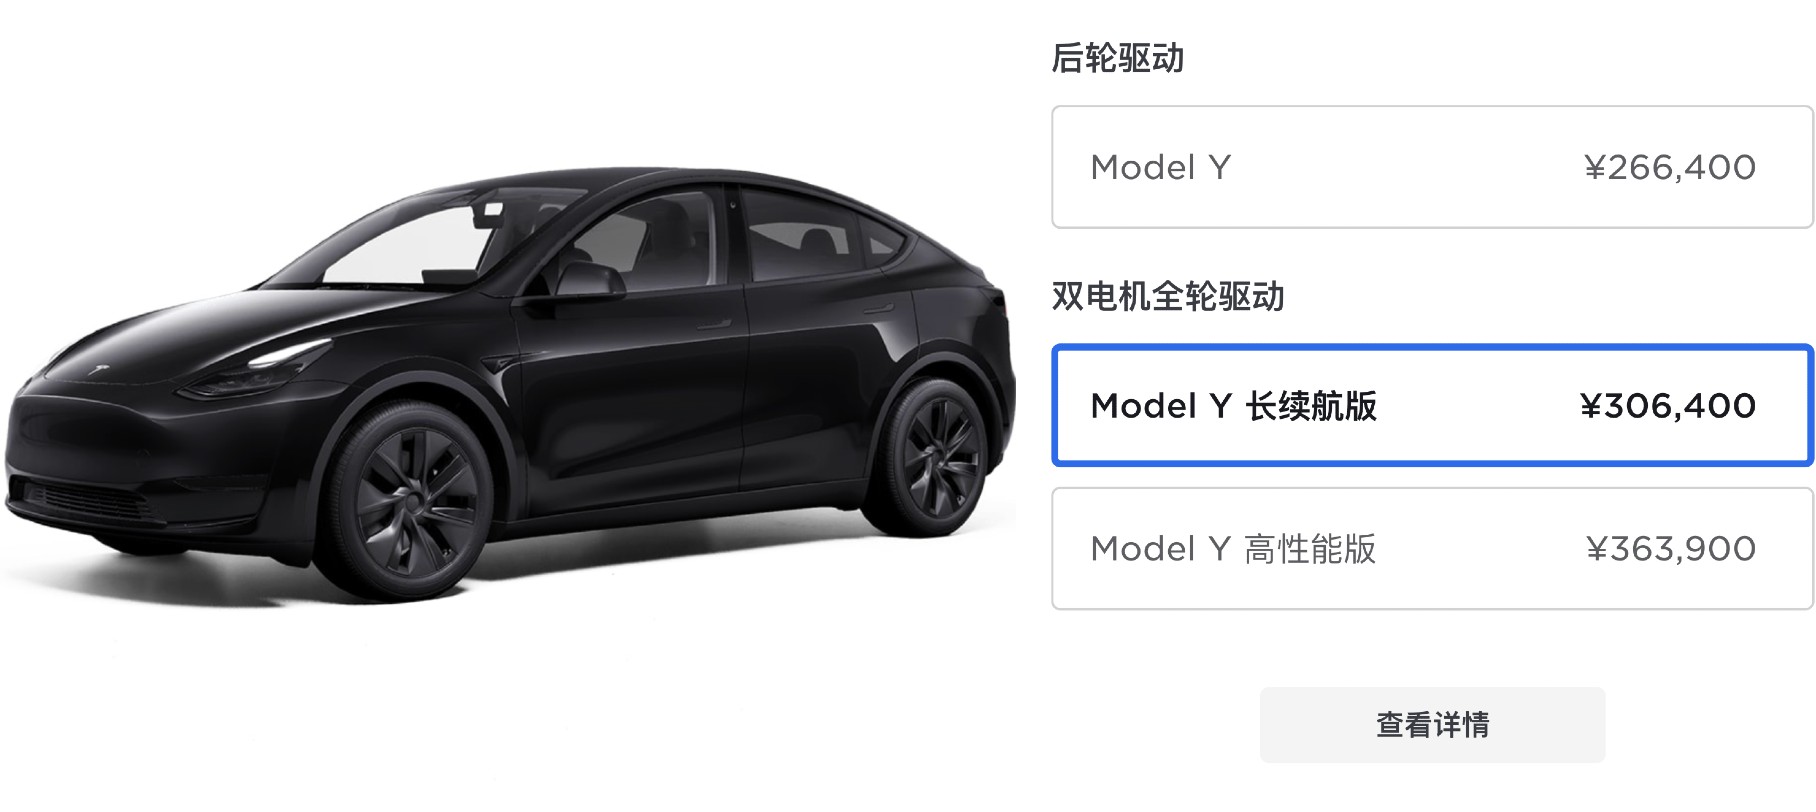 Tesla slightly increases Model Y LR price in China